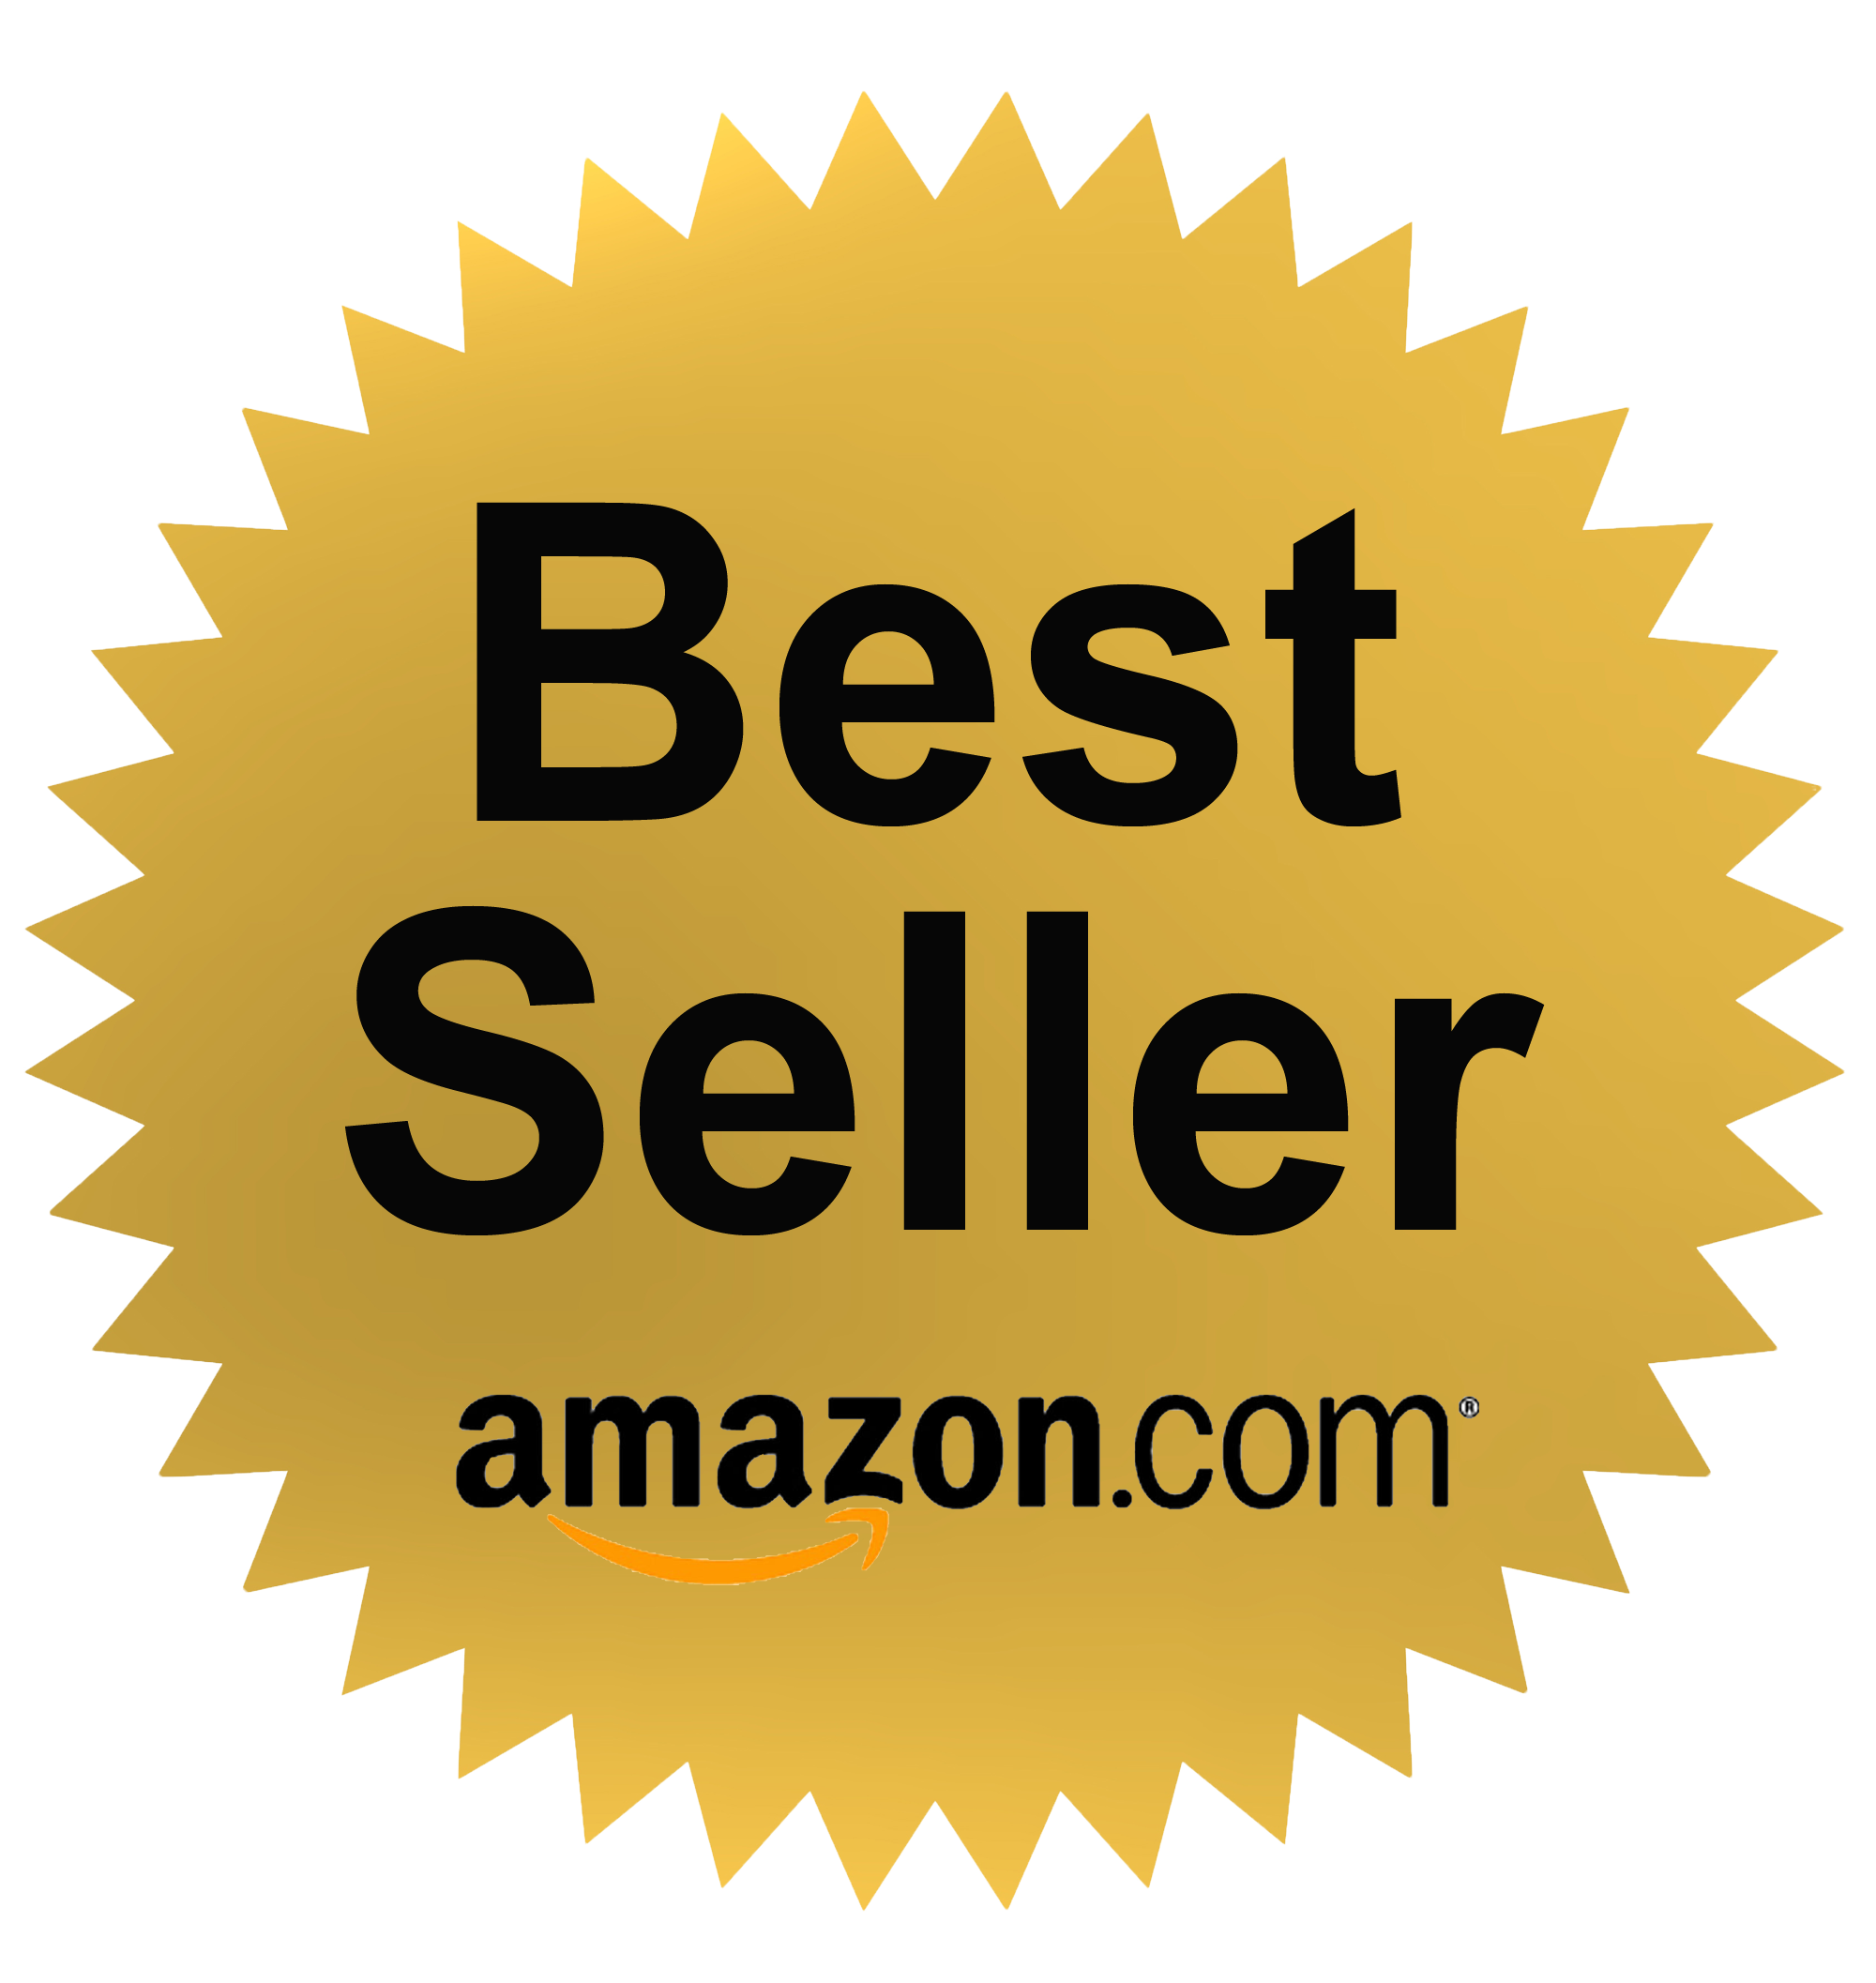 https://www.becomea6figurewoman.com/site/wp-content/uploads/2012/10/Amazon-HD-Best-Seller-Xparent.png